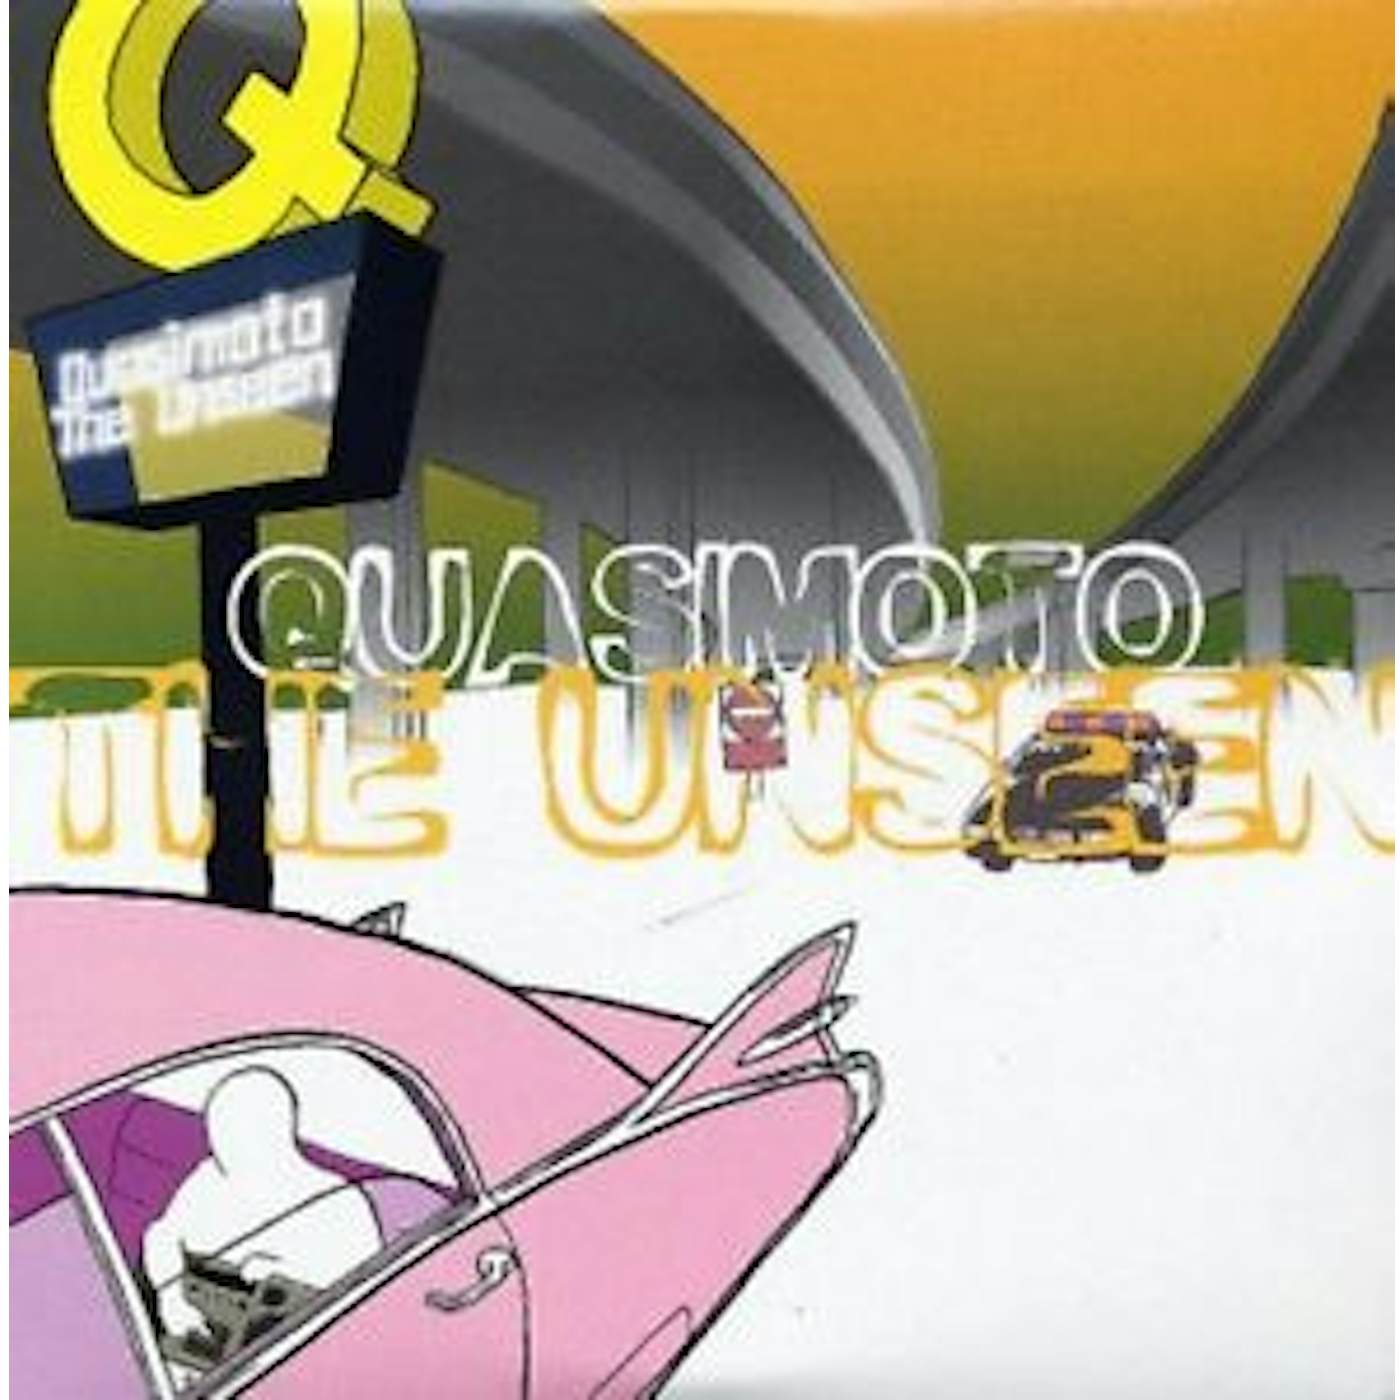 Quasimoto The Unseen Vinyl Record